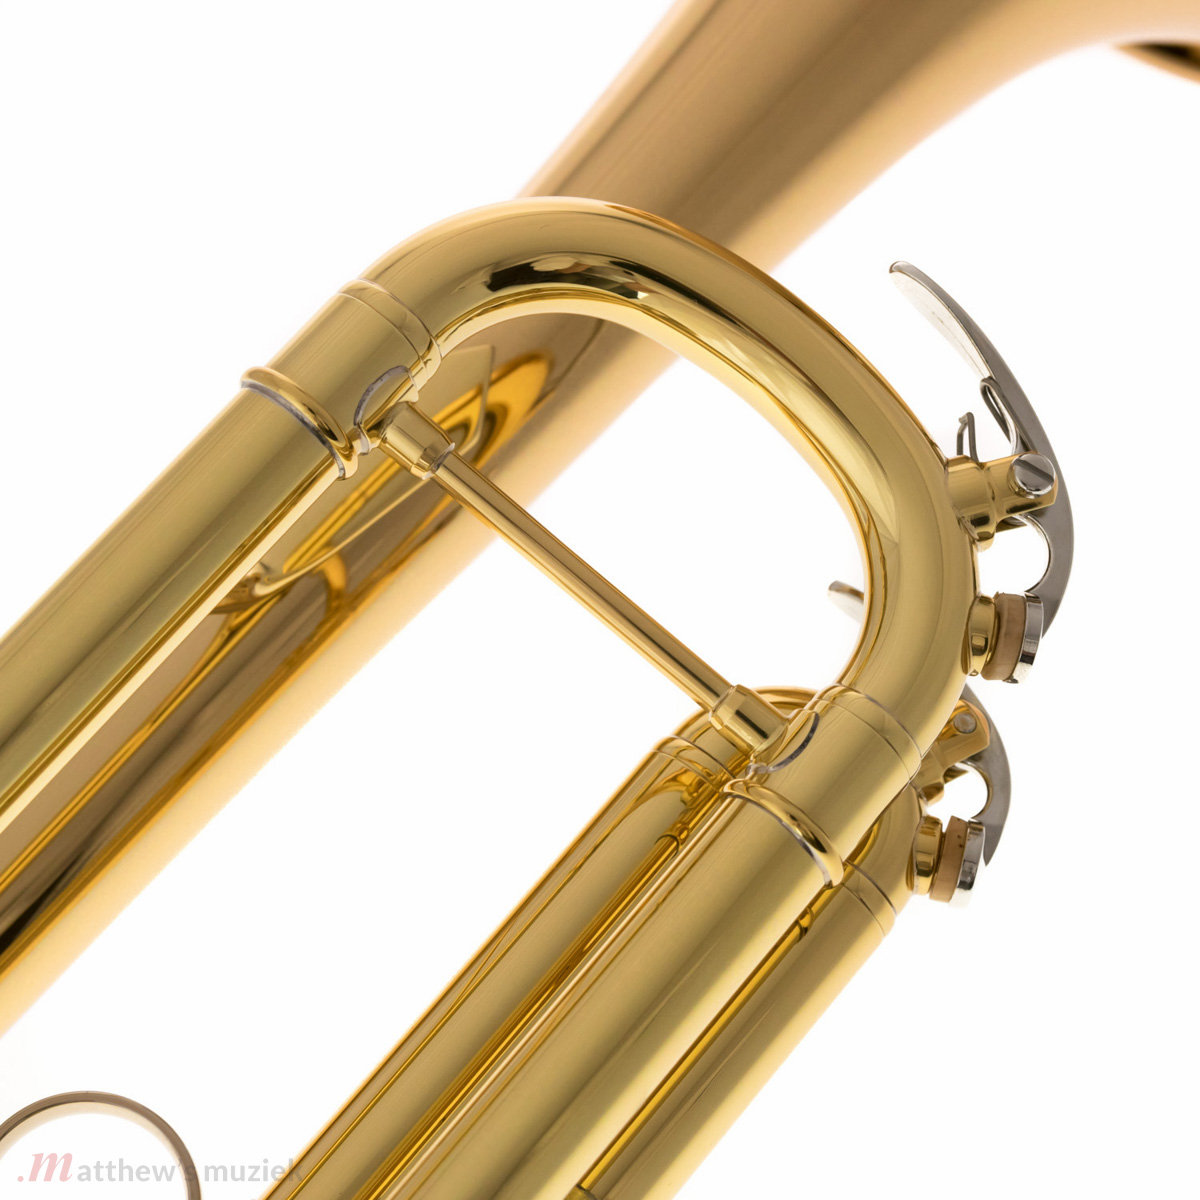 Yamaha Bb Trompet - YTR 5335 G II